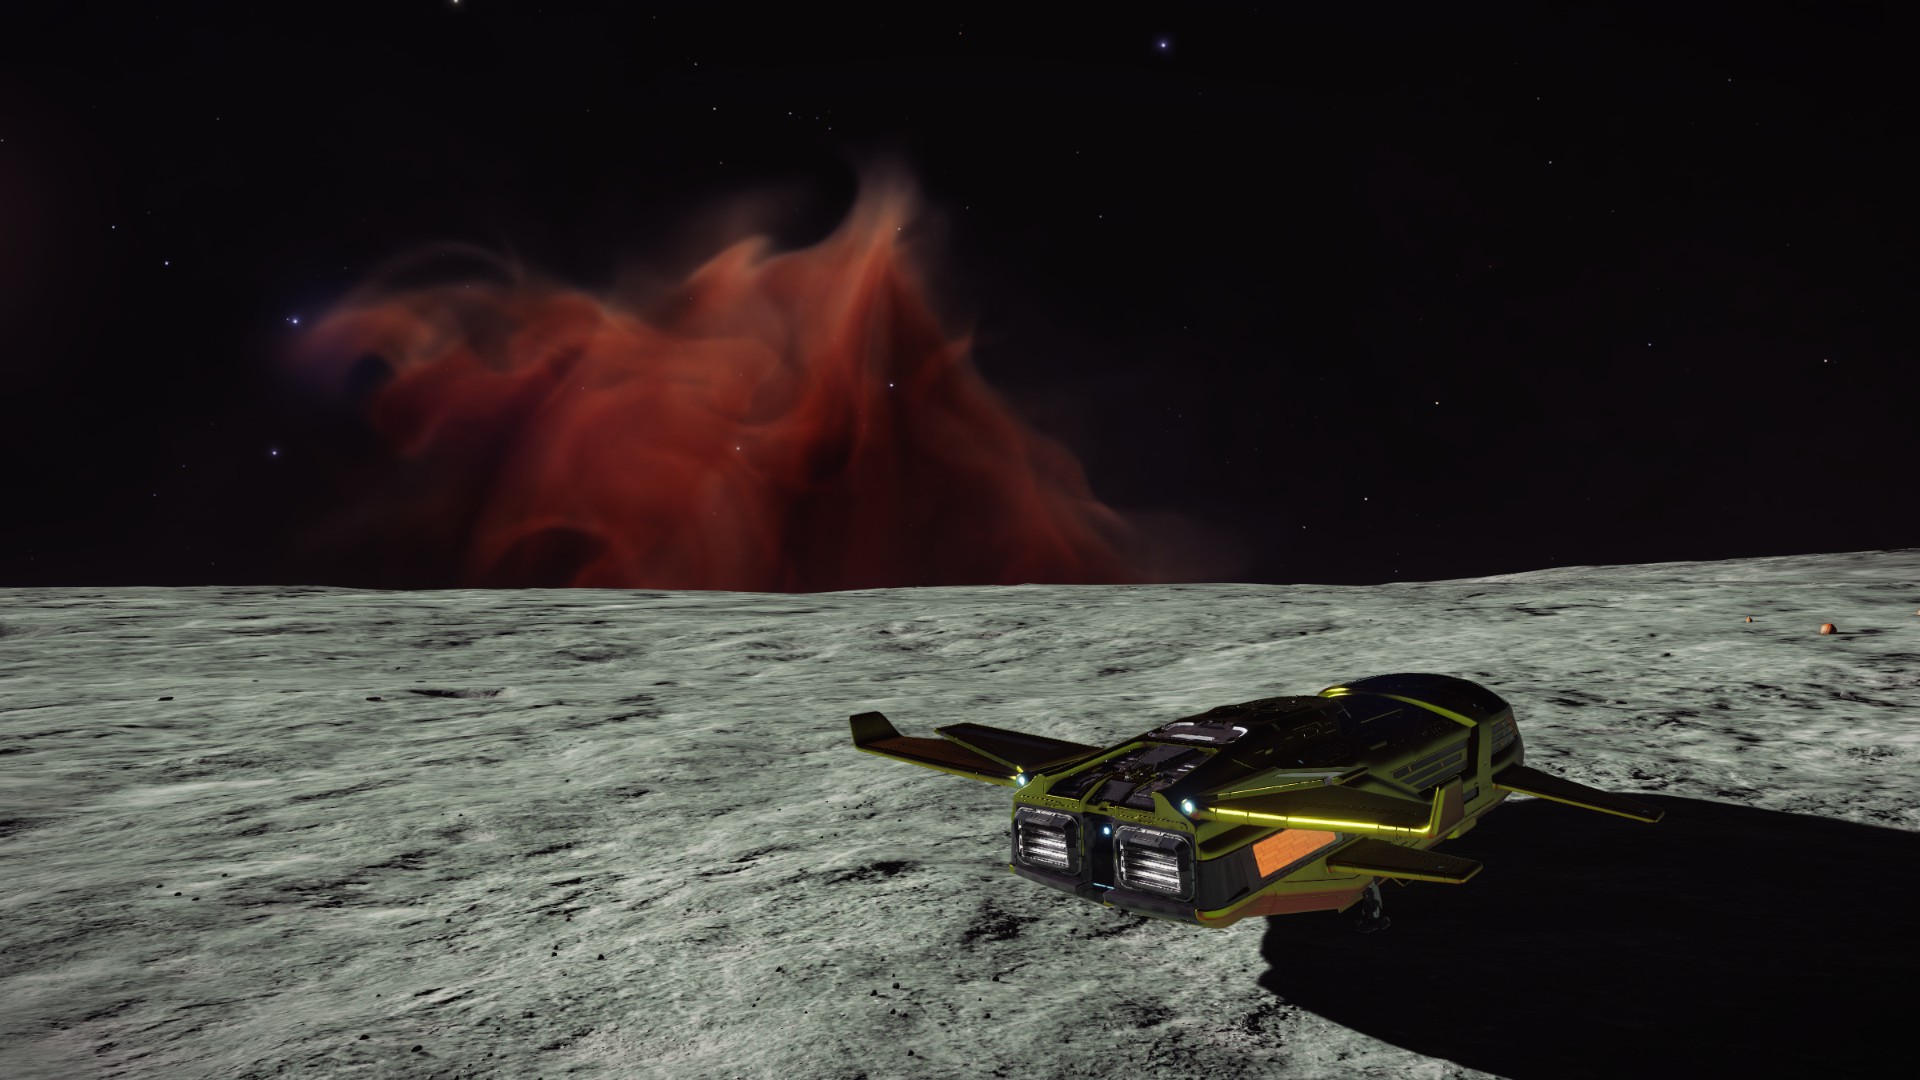 Sunset of Nebular